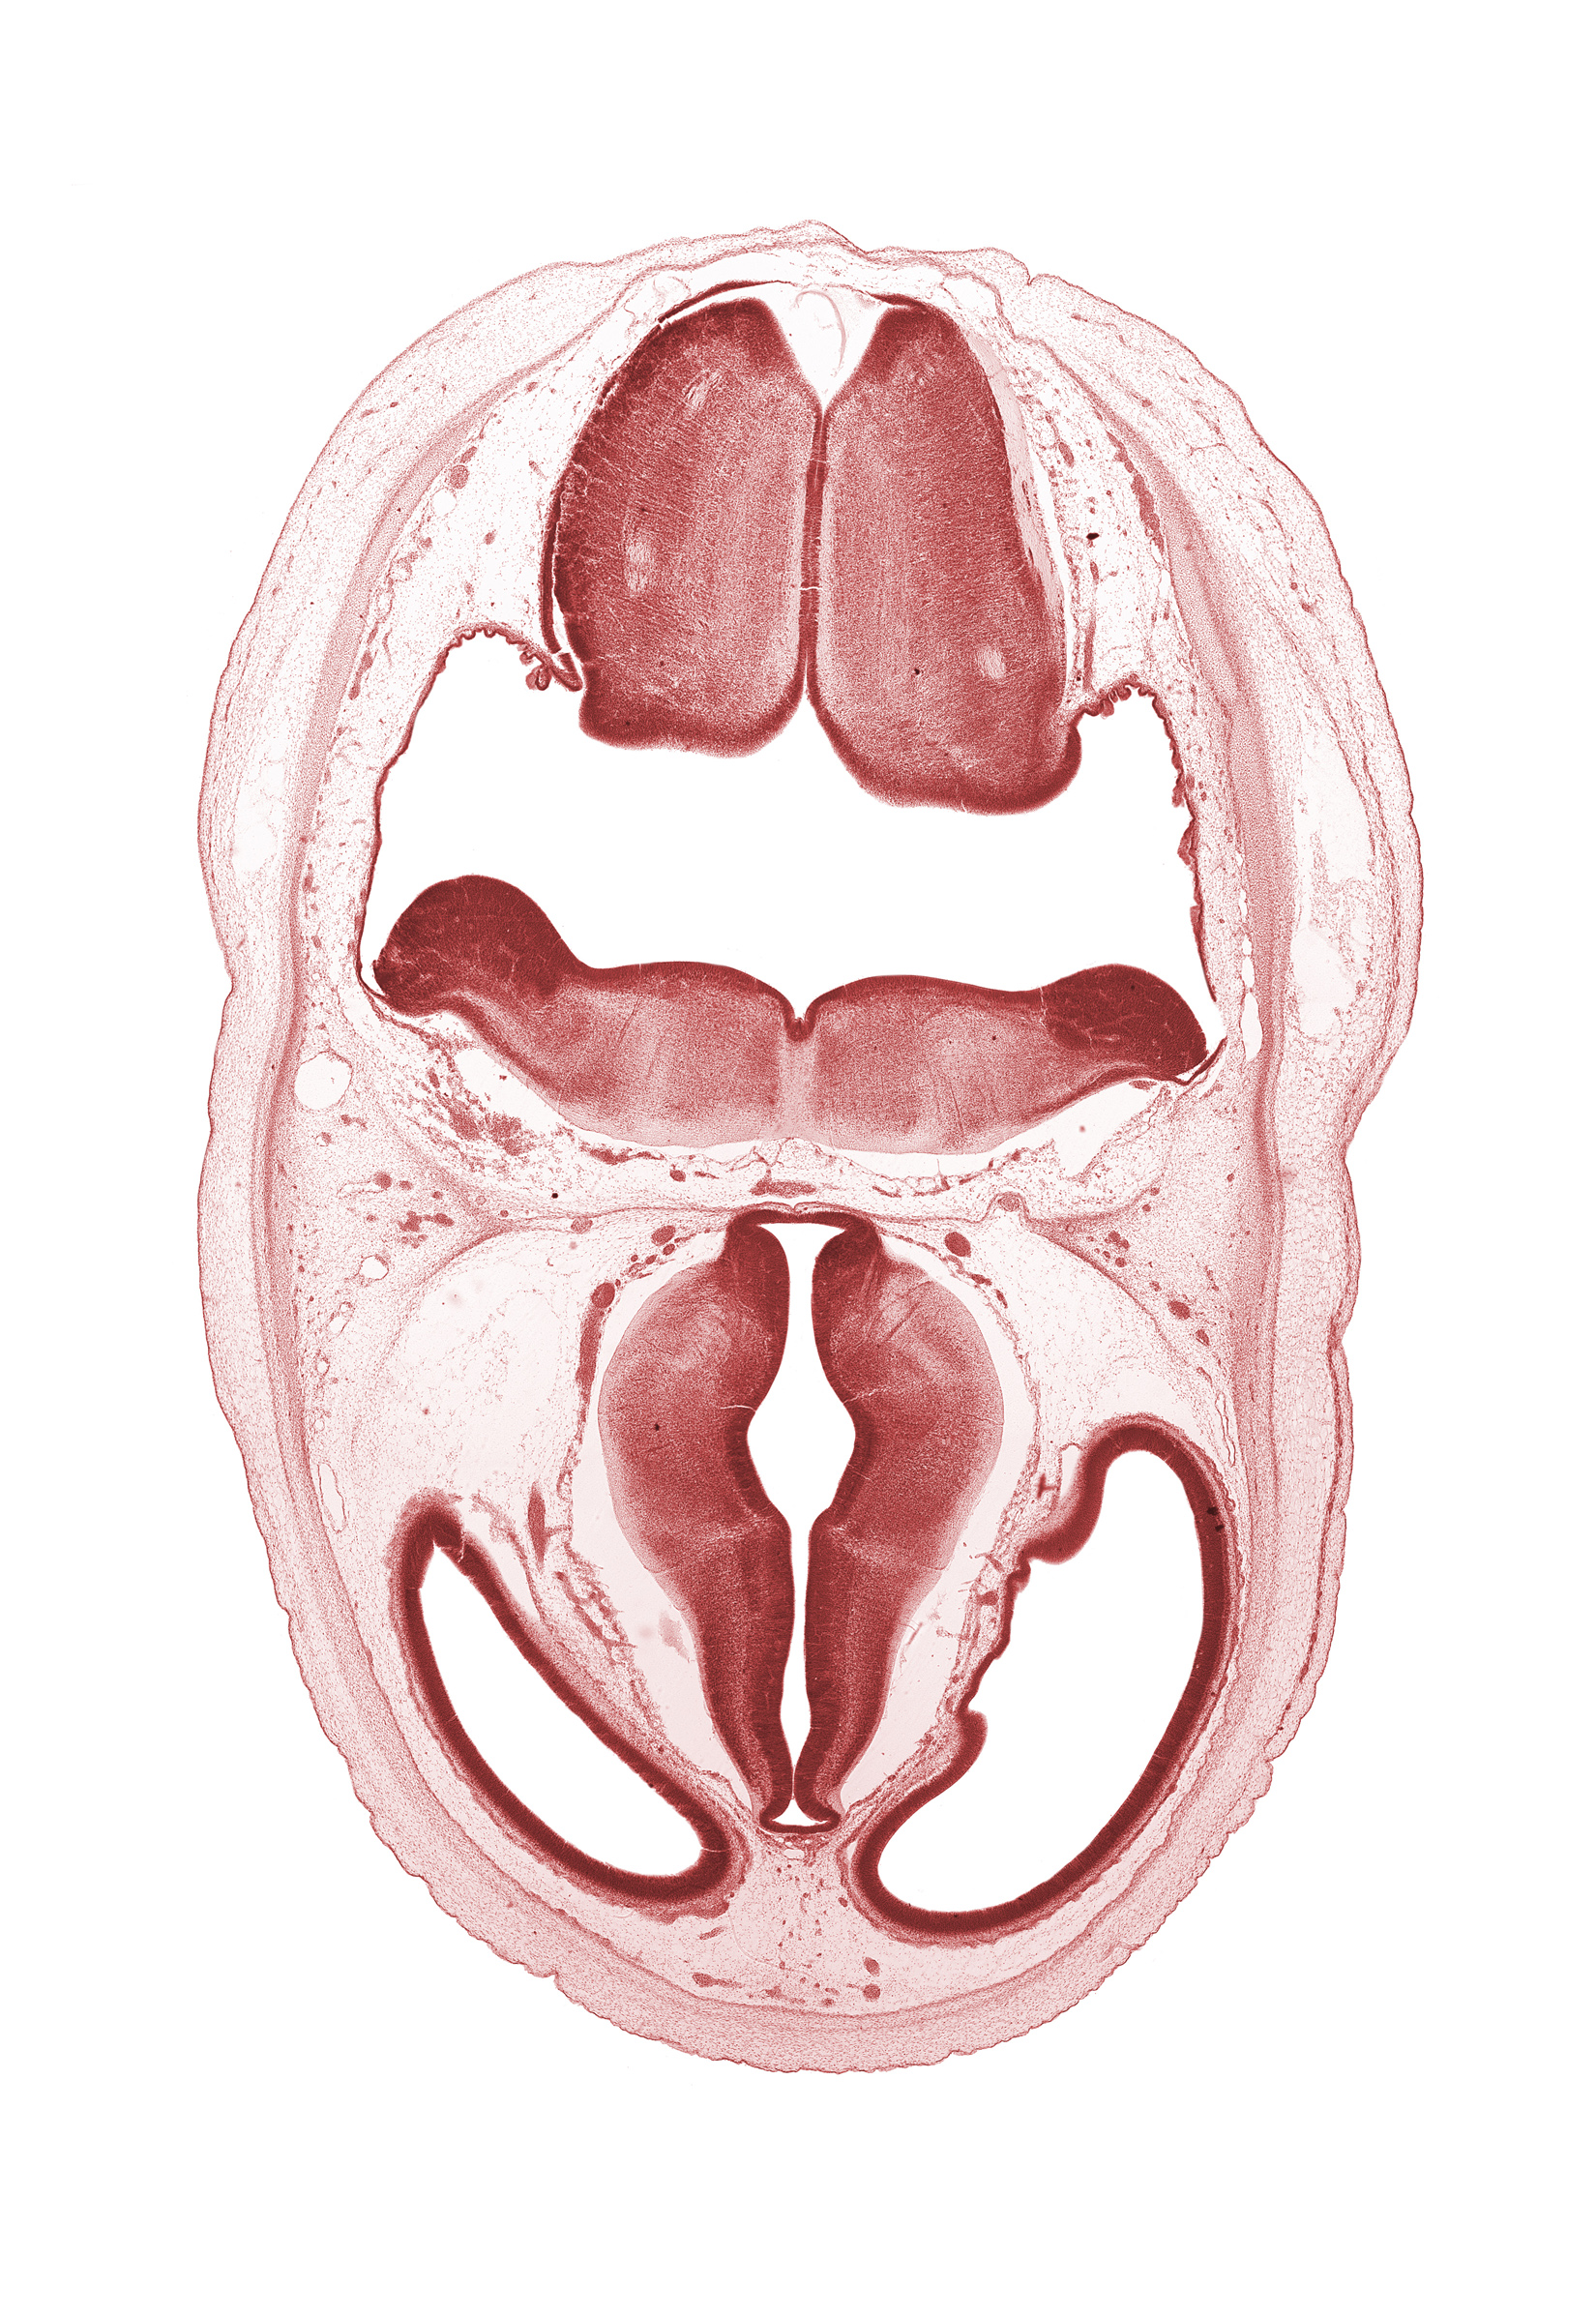 artifact separation(s), basilar artery, cerebral vesicle (telencephalon), dorsal thalamus, hypothalamic sulcus, hypothalamus, osteogenic layer, pons region (metencephalon), posterior communicating artery, rhombencoel (fourth ventricle), roof plate, subarachnoid space, ventral thalamus, zona limitans intrathalamica